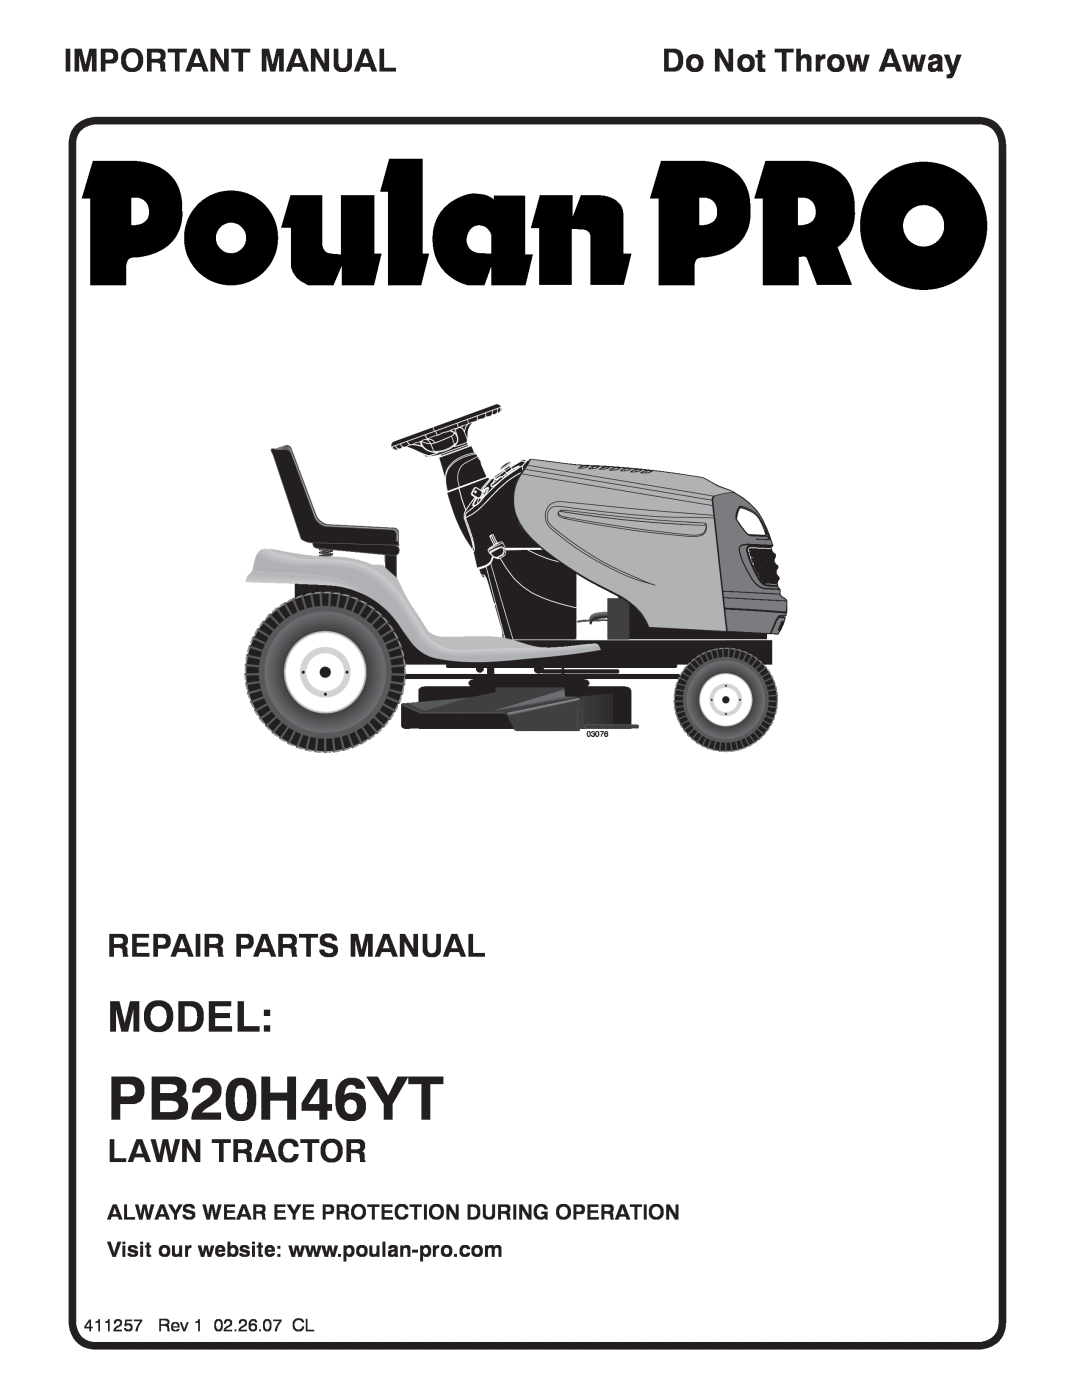 Poulan PB20H46YT manual Model, Important Manual, Repair Parts Manual, Lawn Tractor, Do Not Throw Away 